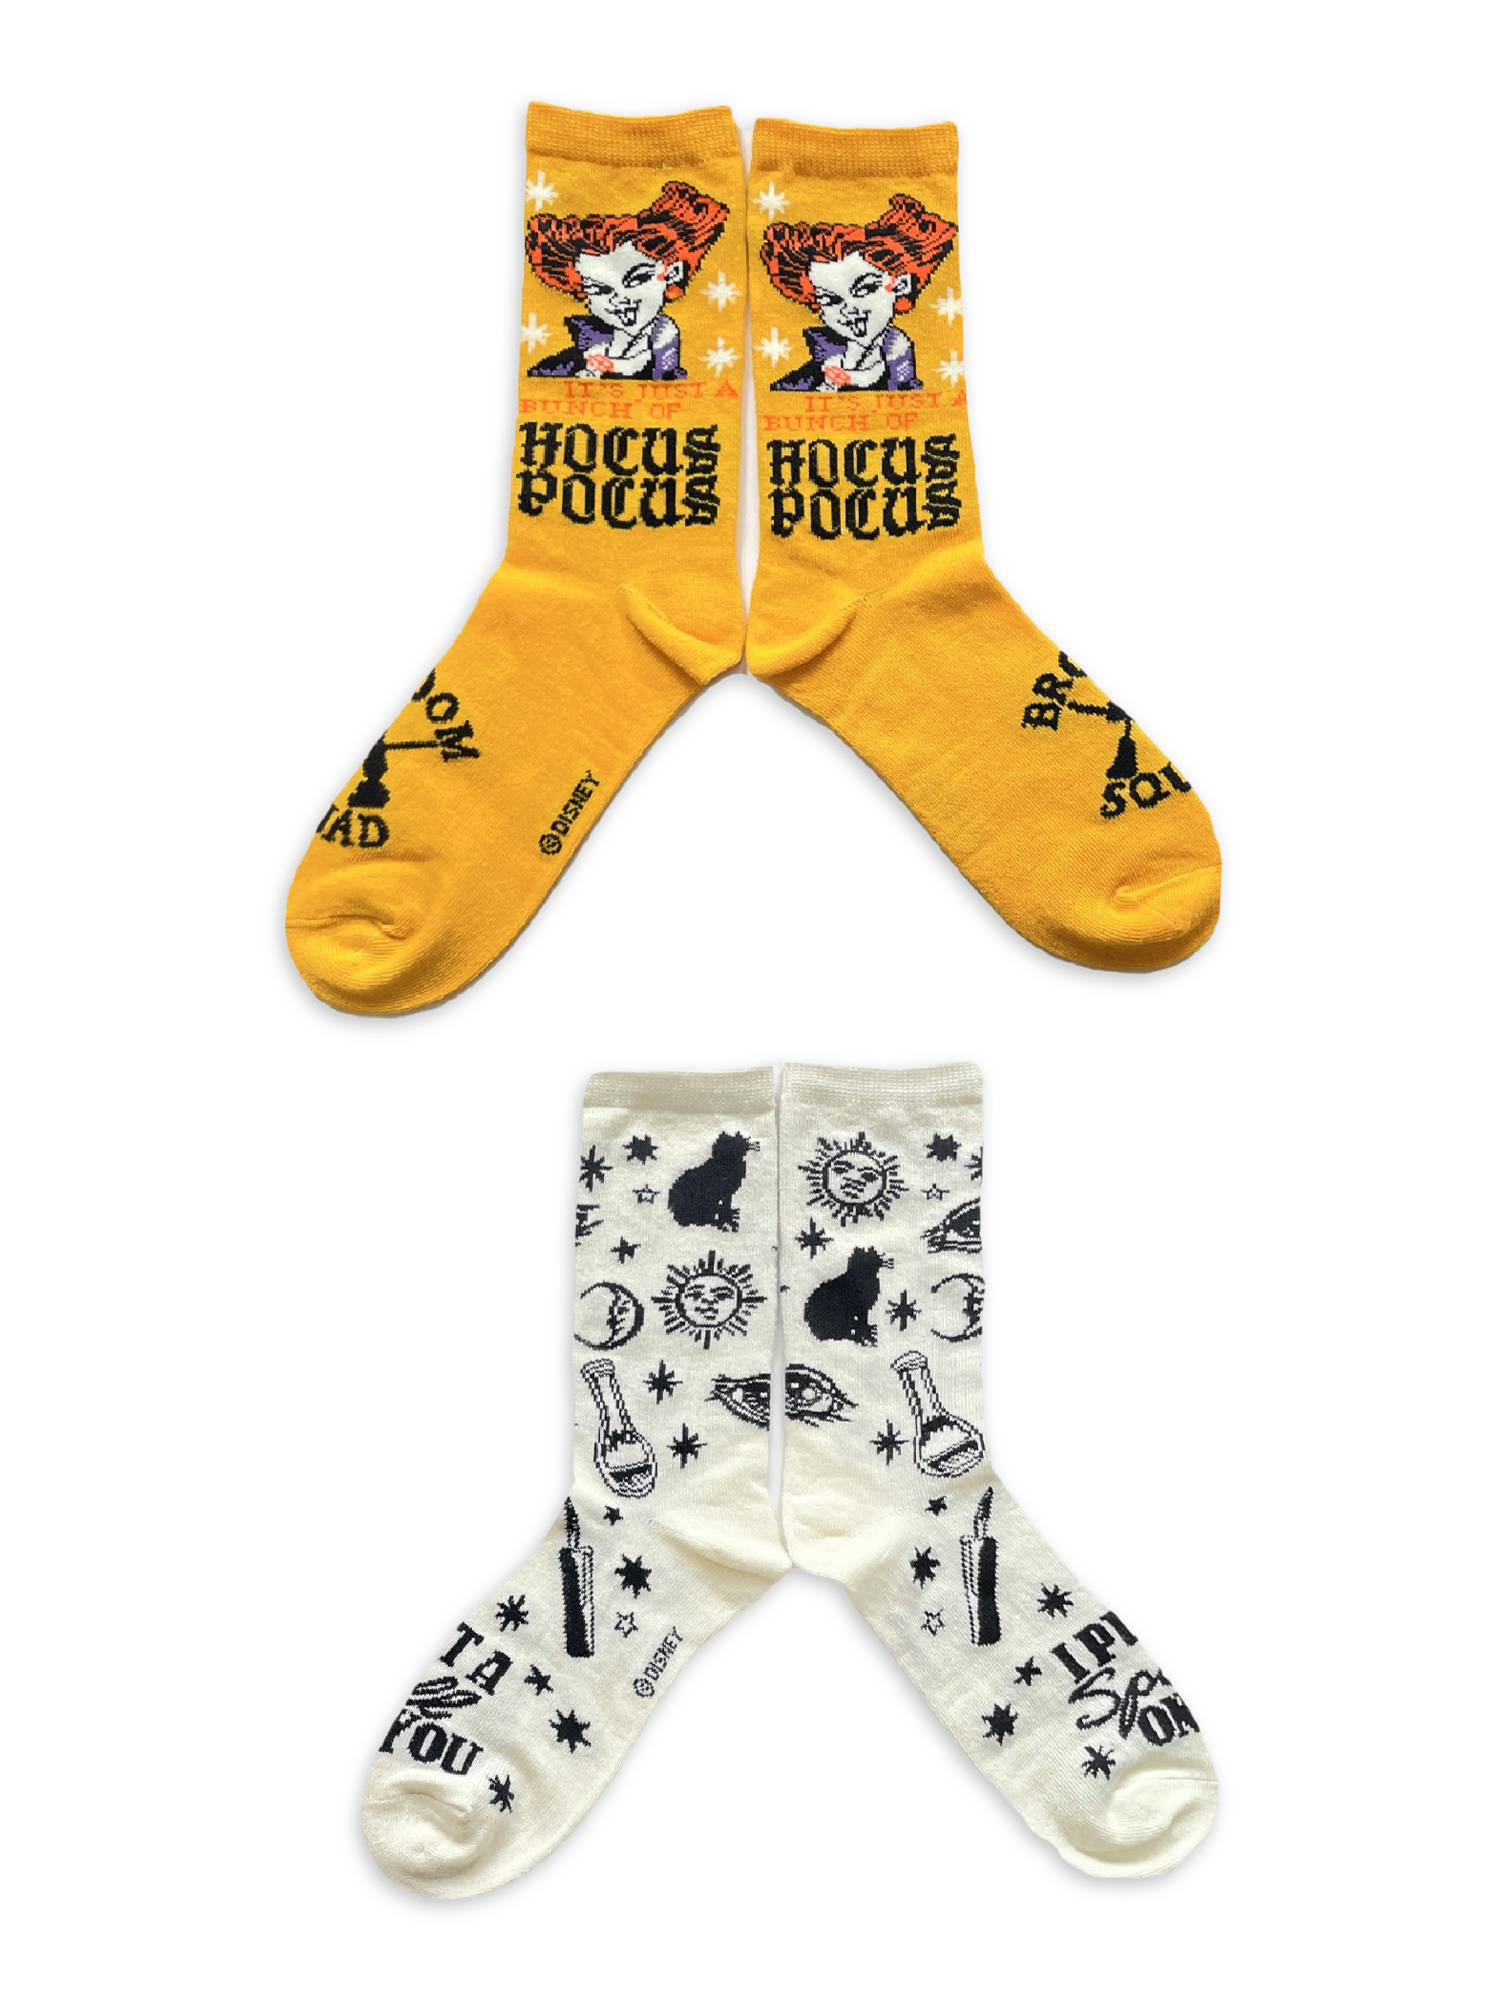 Hocus Pocus Women's Halloween Crew Socks, 2-Pack, Size 4-10 - image 4 of 7